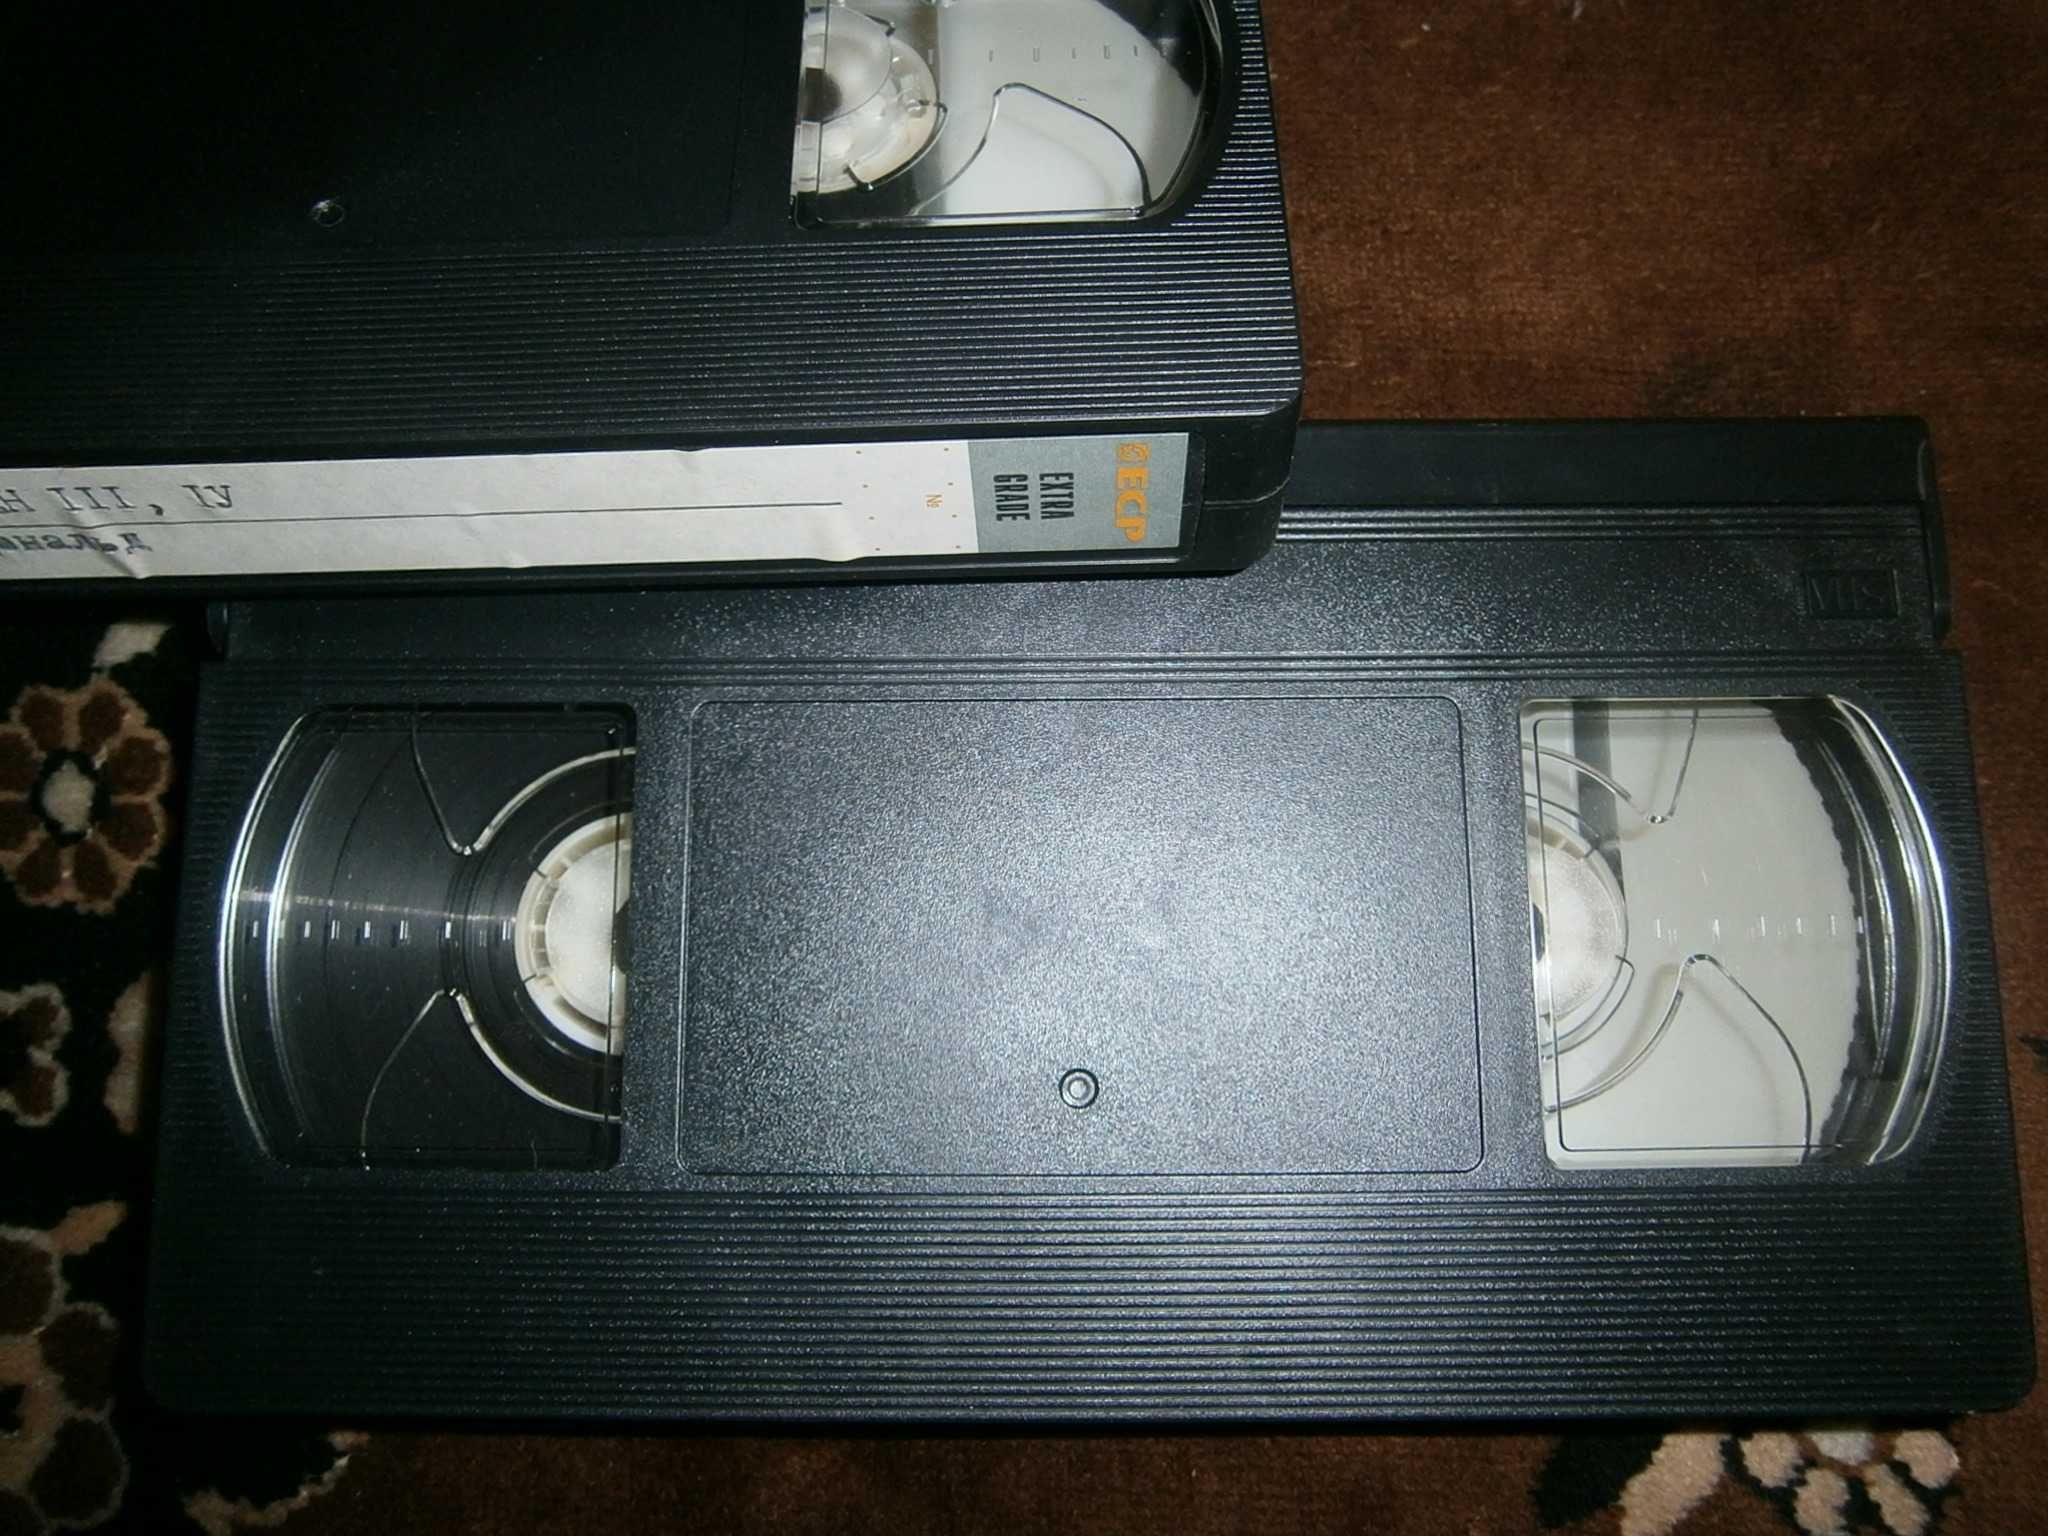 Весь "ОМЕН" 1,2,3,4 (ориг.) на 2-х кас. VHS E 240 + доп. мульт. Диснея